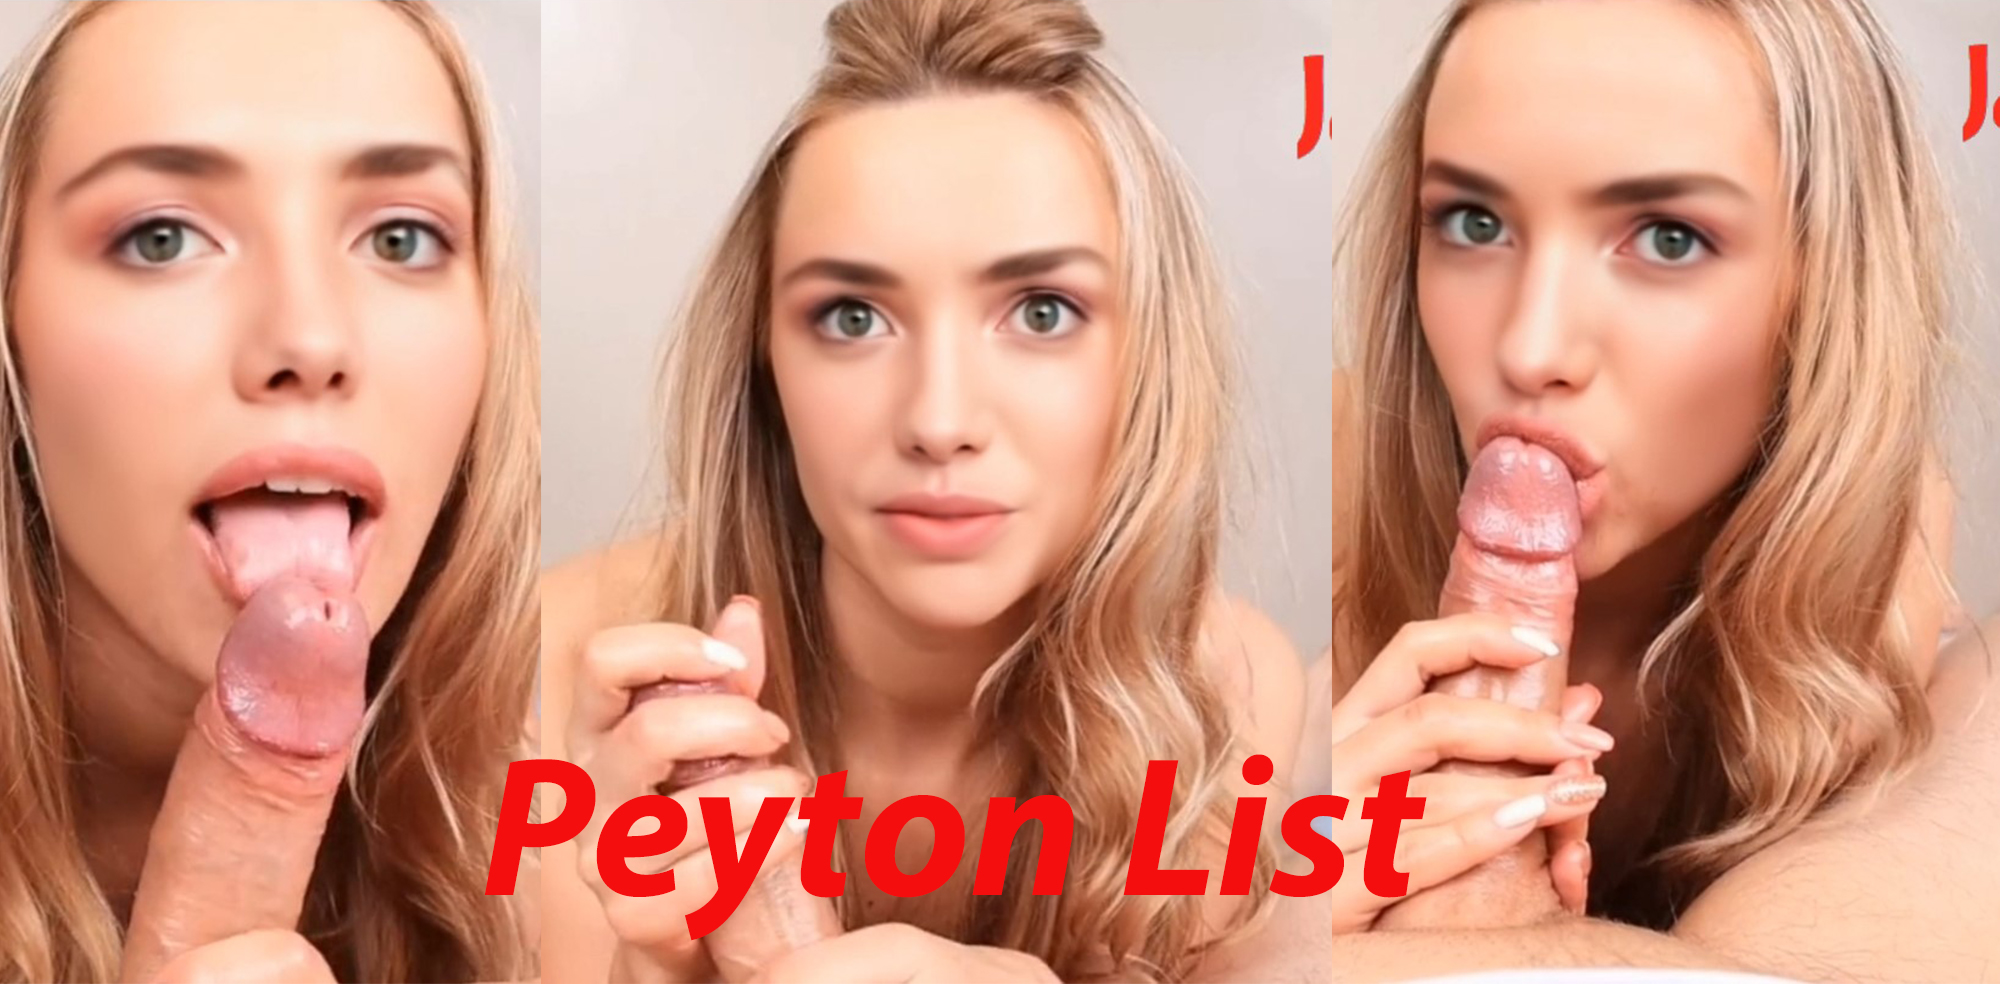 Peyton List amazing teasing and blowjob (full version)